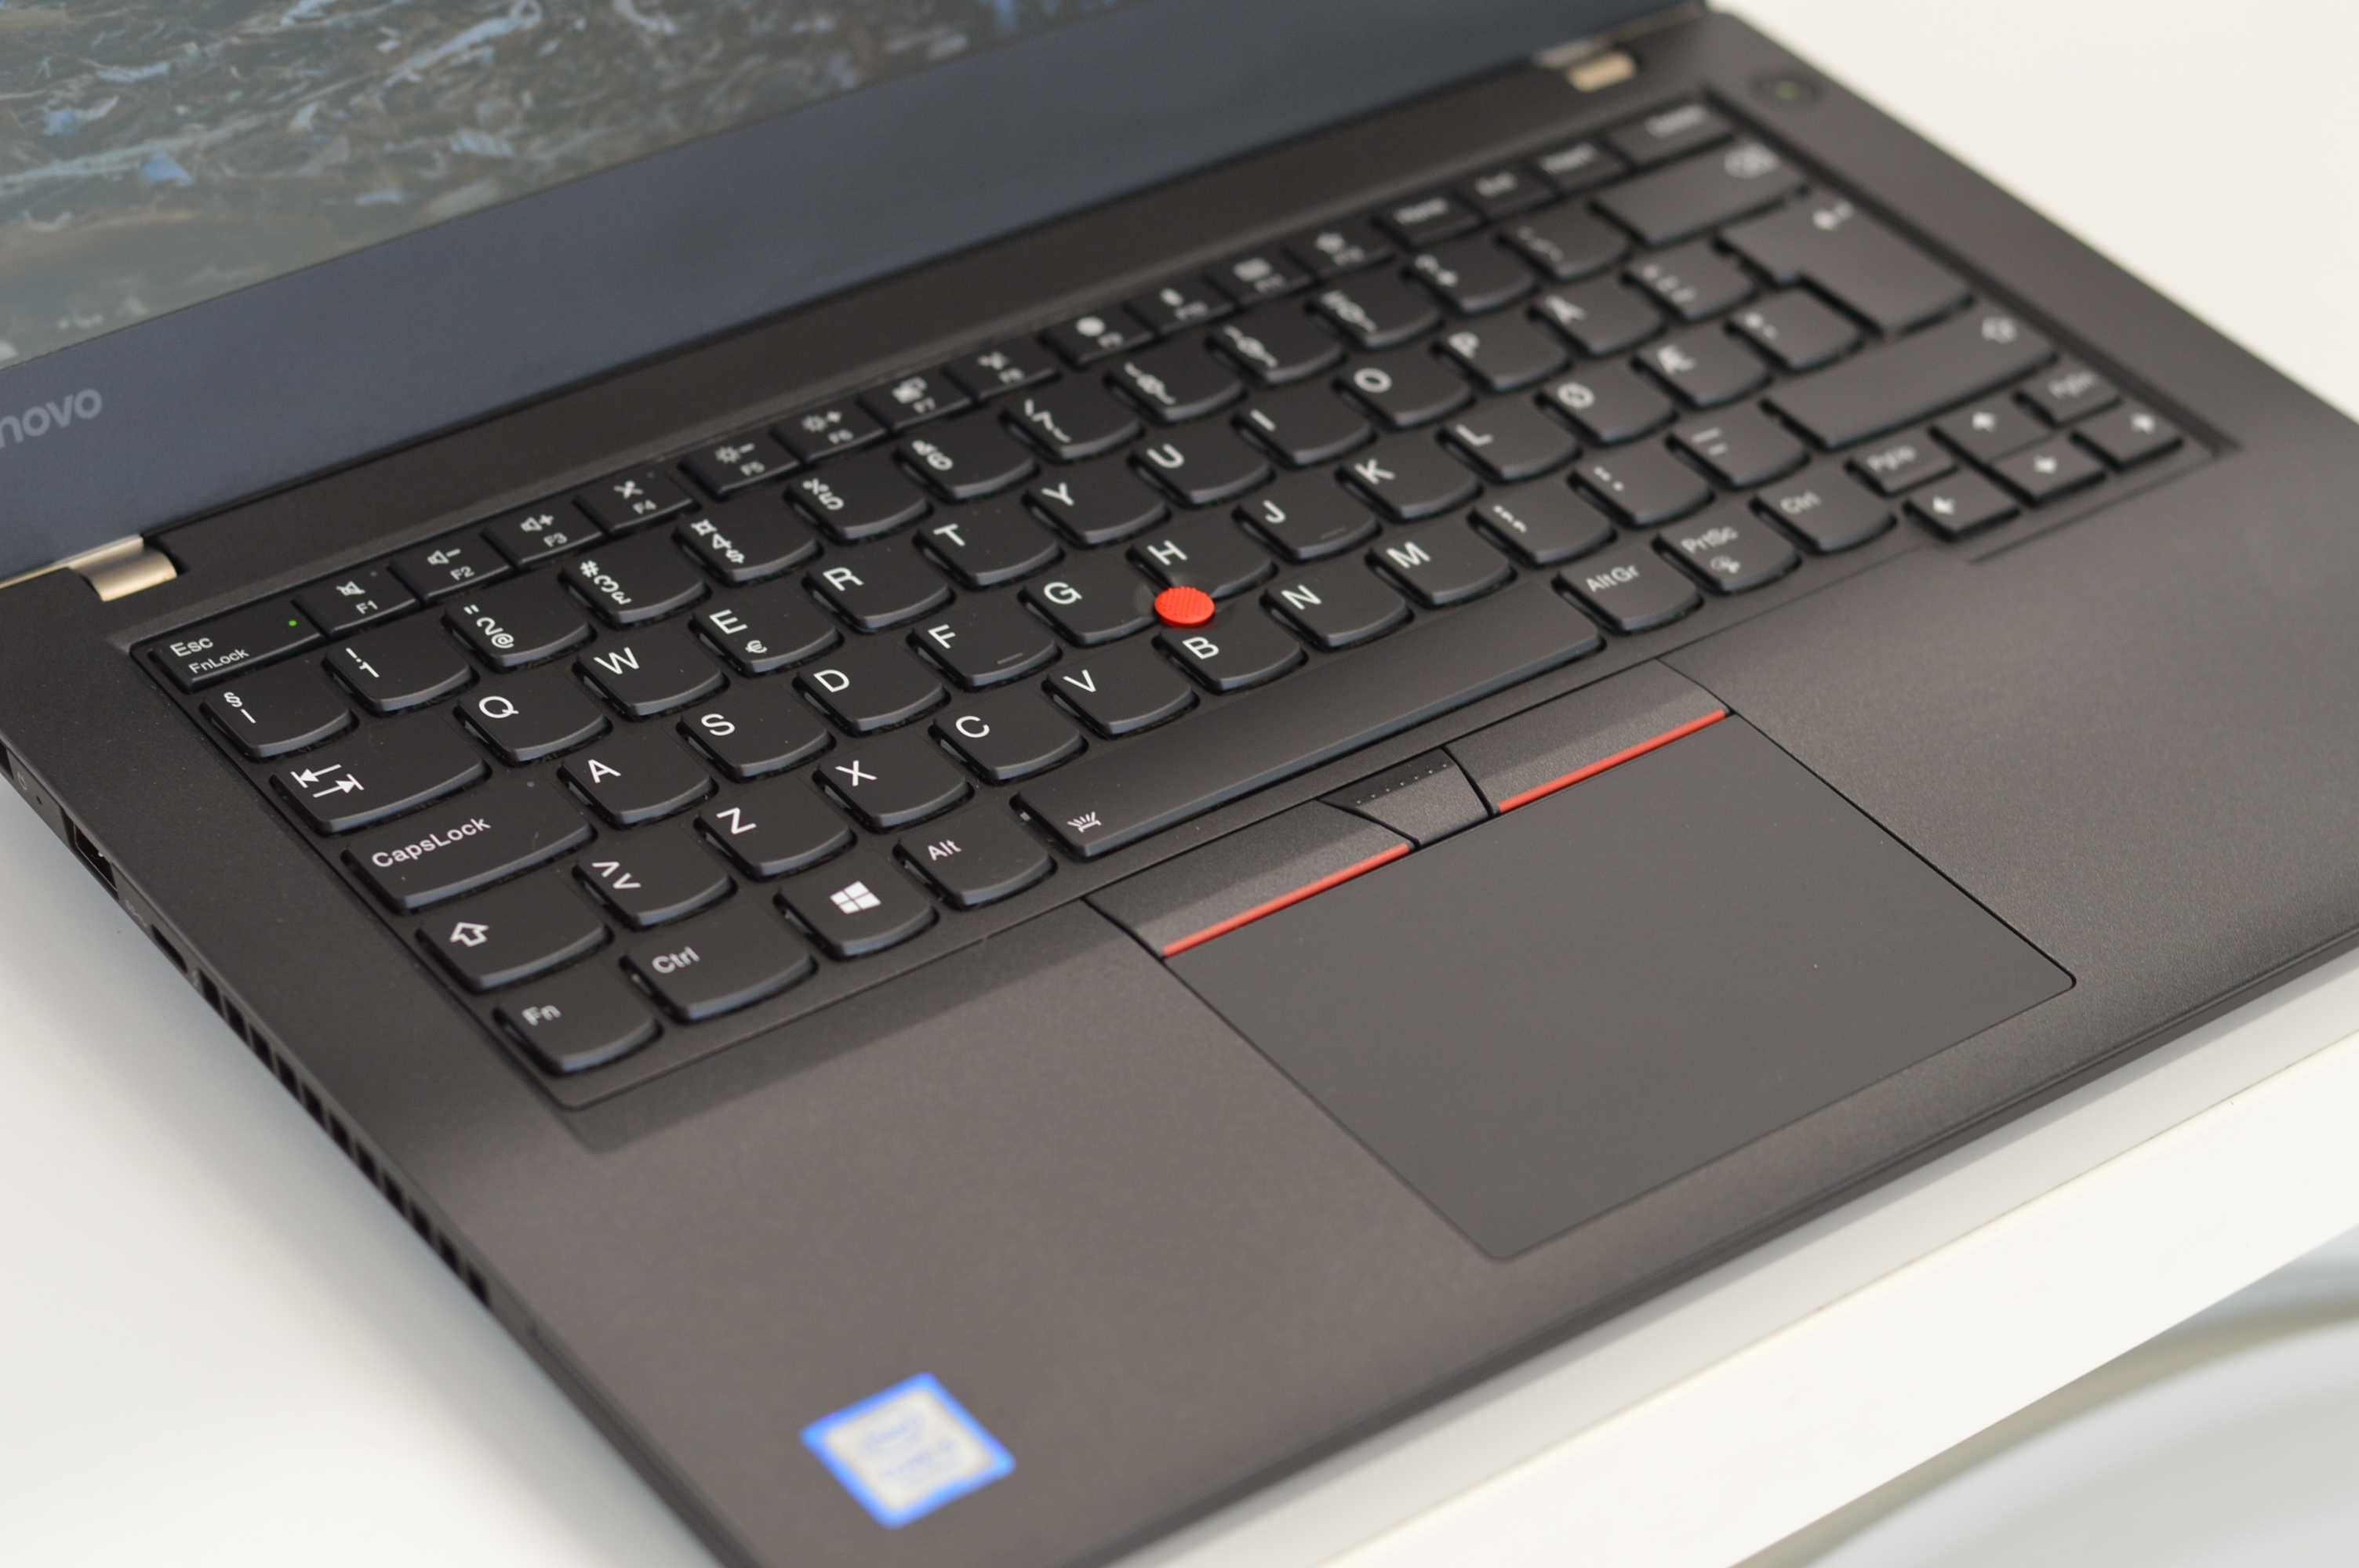 Лаптоп Lenovo ThinkPad T470 - Intel Core i5-6300U/(1920x1080) Touch